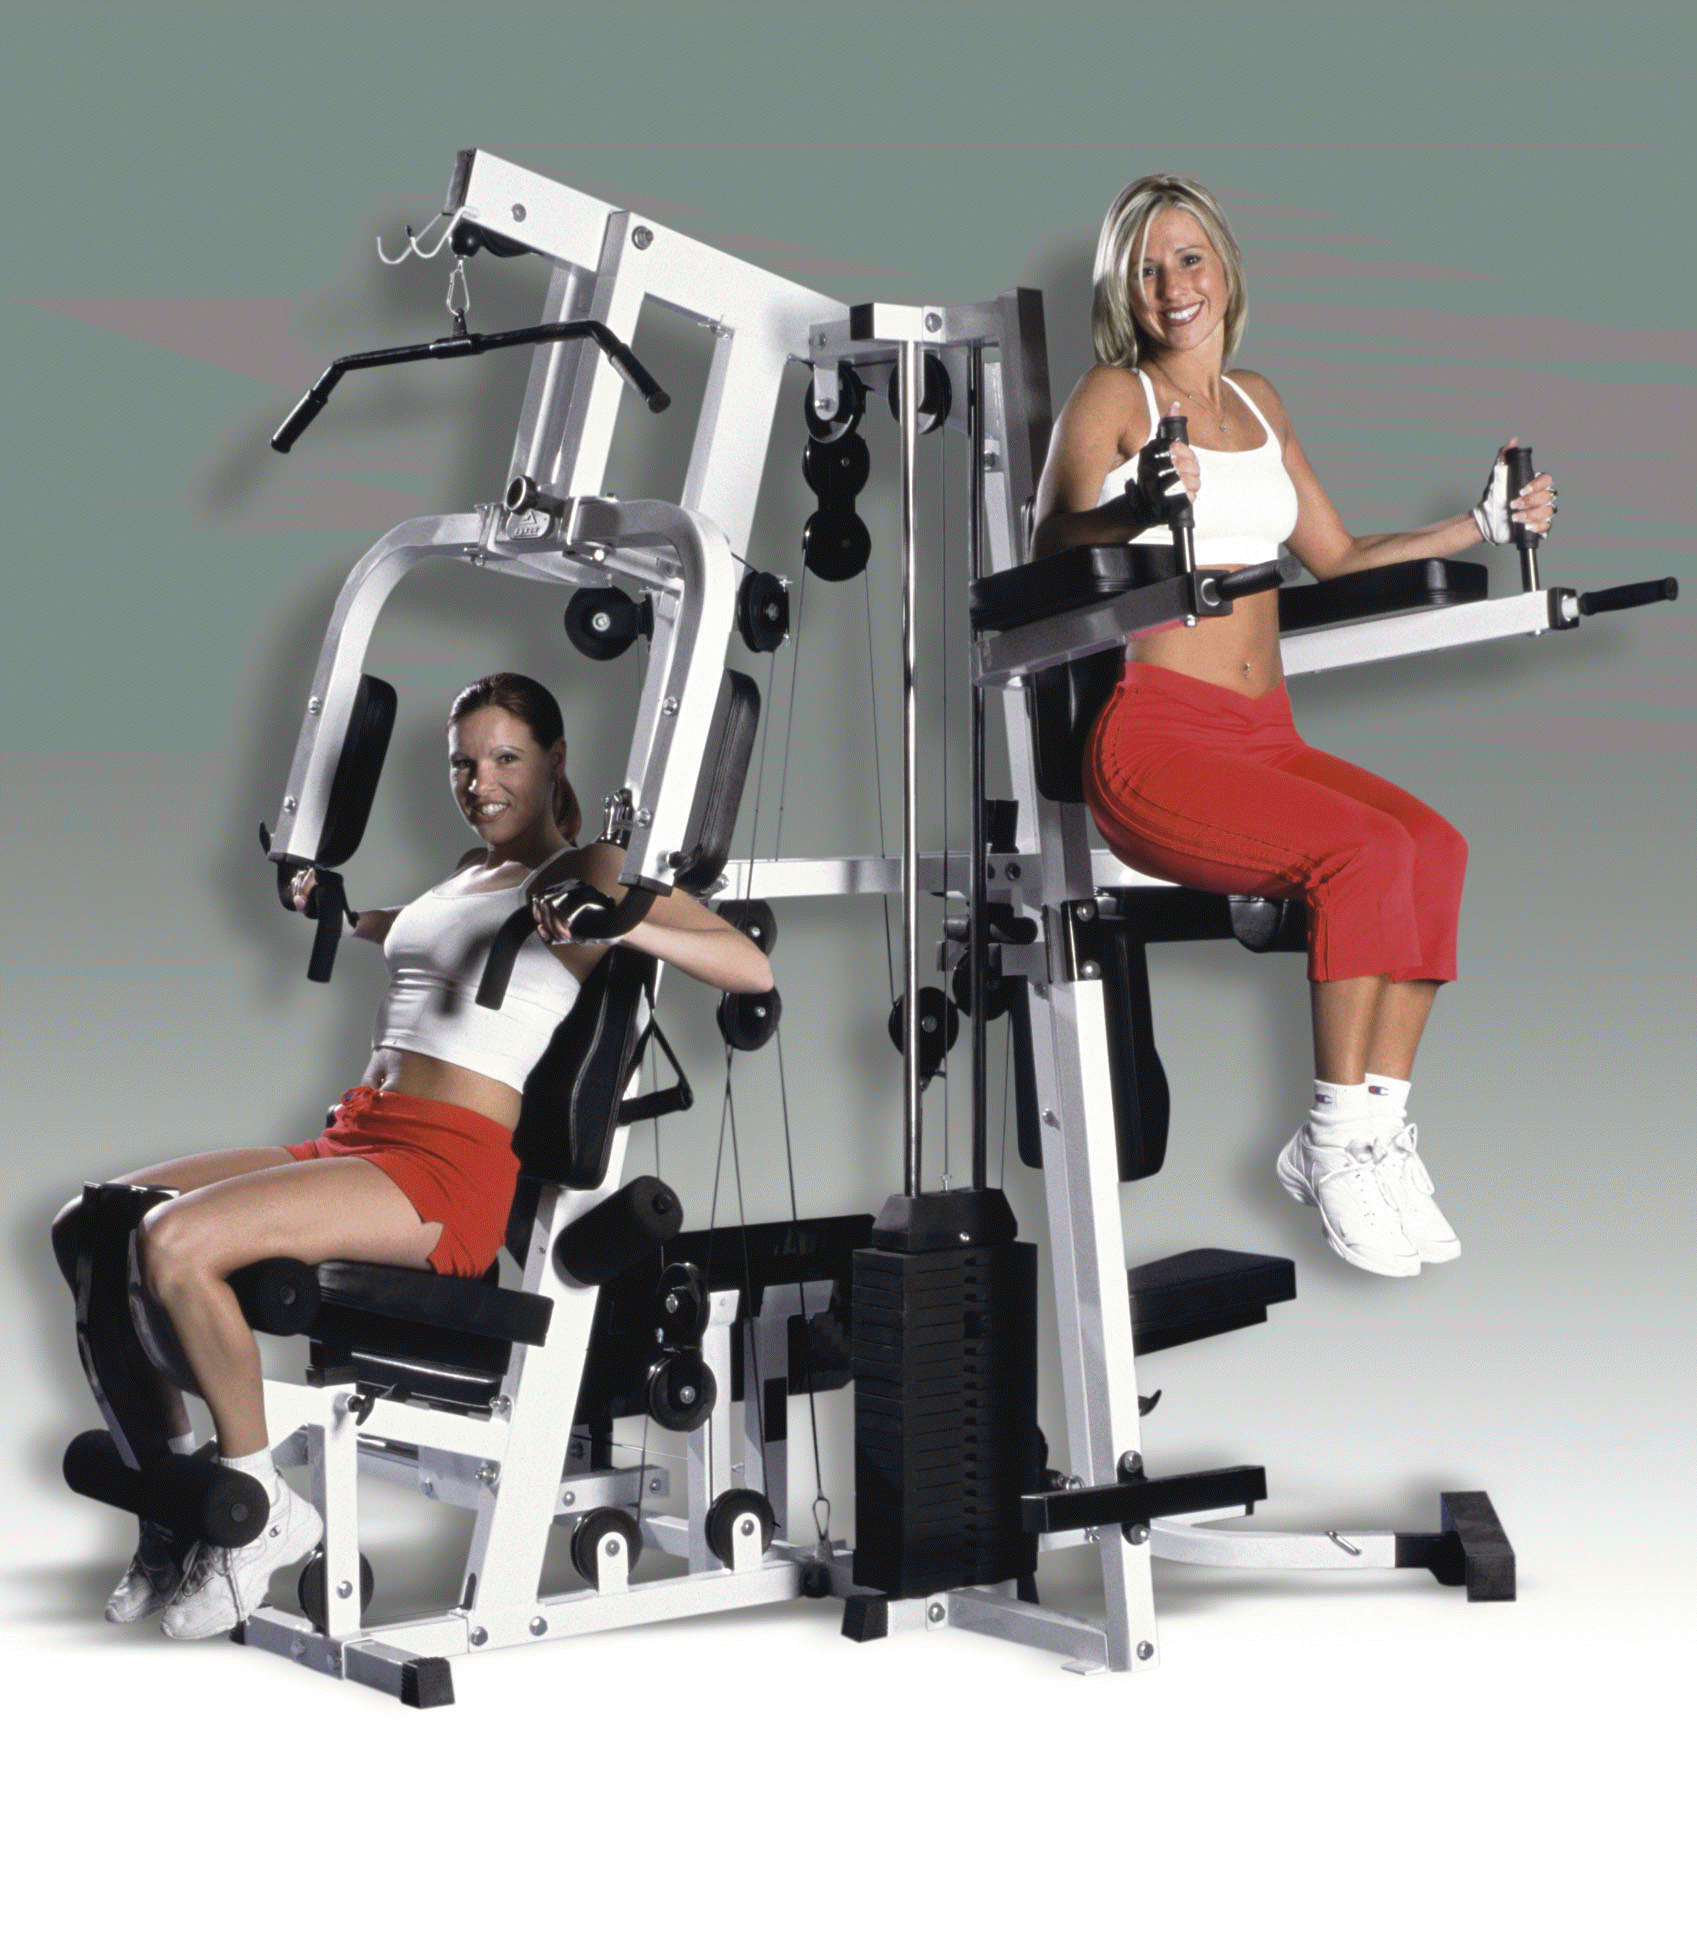 yukon fitness - Yukon home gyms - fitness equipment - exercise ...